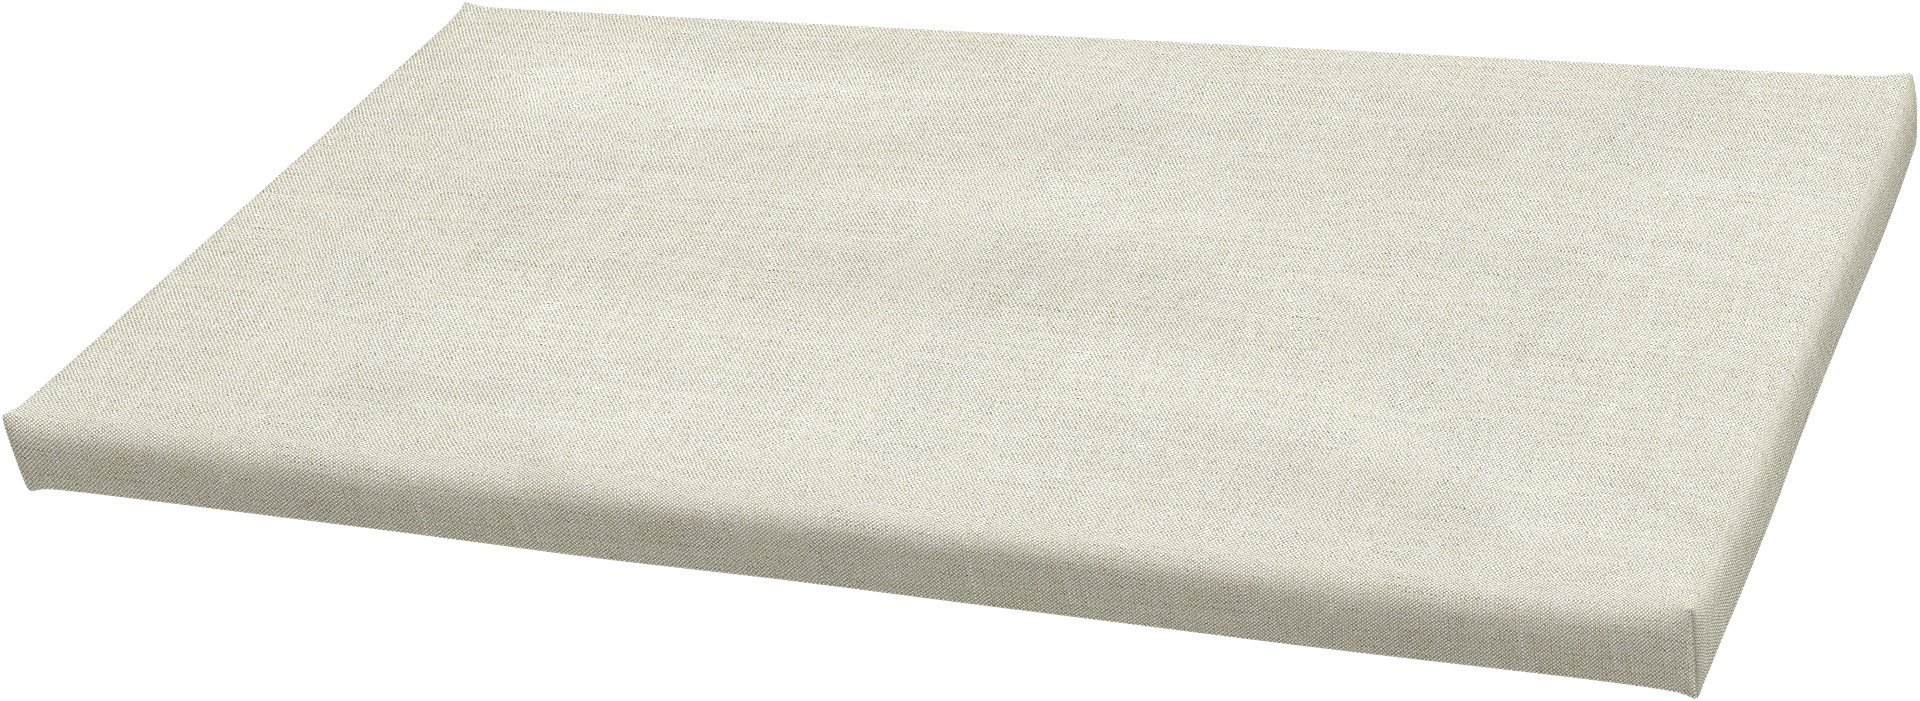 IKEA - Bankkamrat Cushion Cover 90x50x3,5 cm , Natural, Linen - Bemz